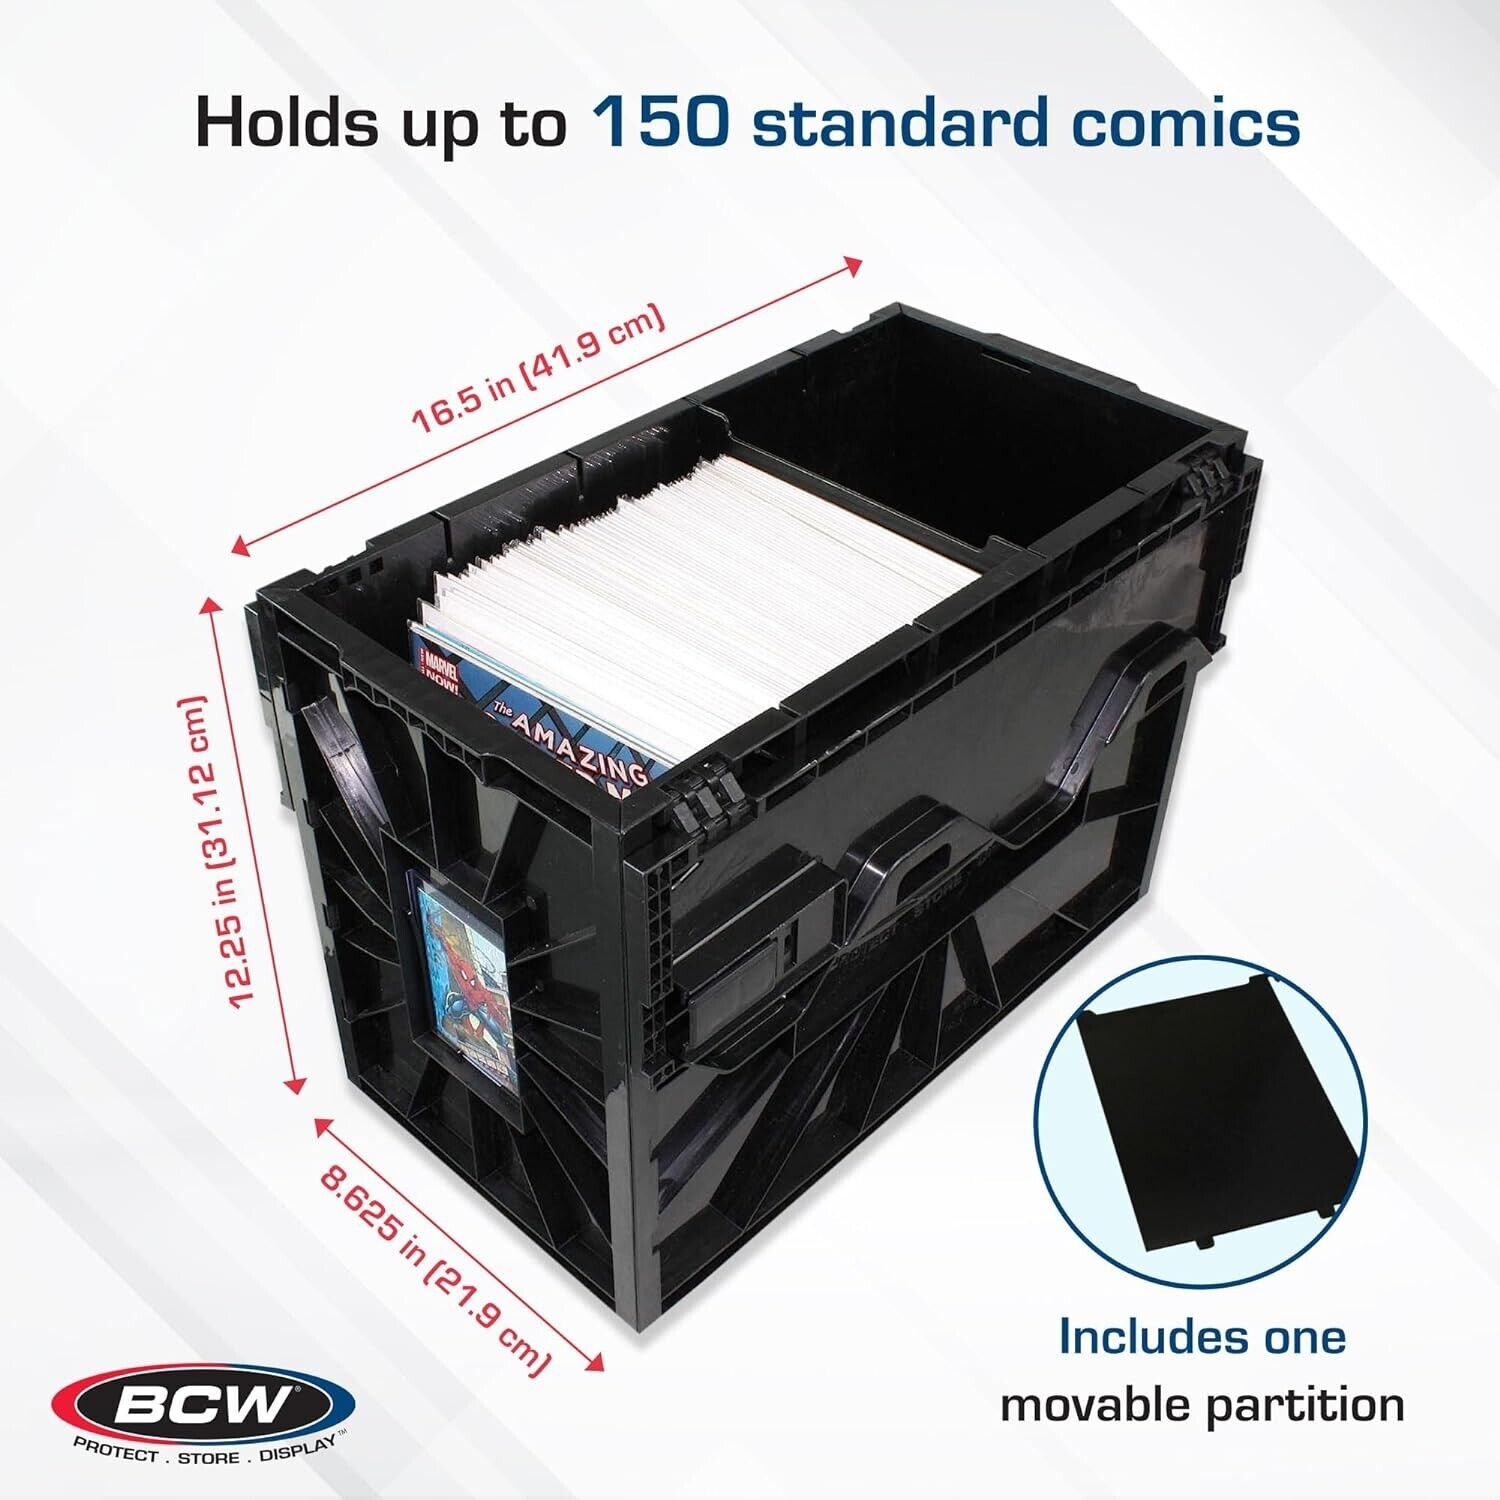 1 BCW BLACK Short Comic Book Bin - Heavy Duty Acid Free Plastic Stackable Box